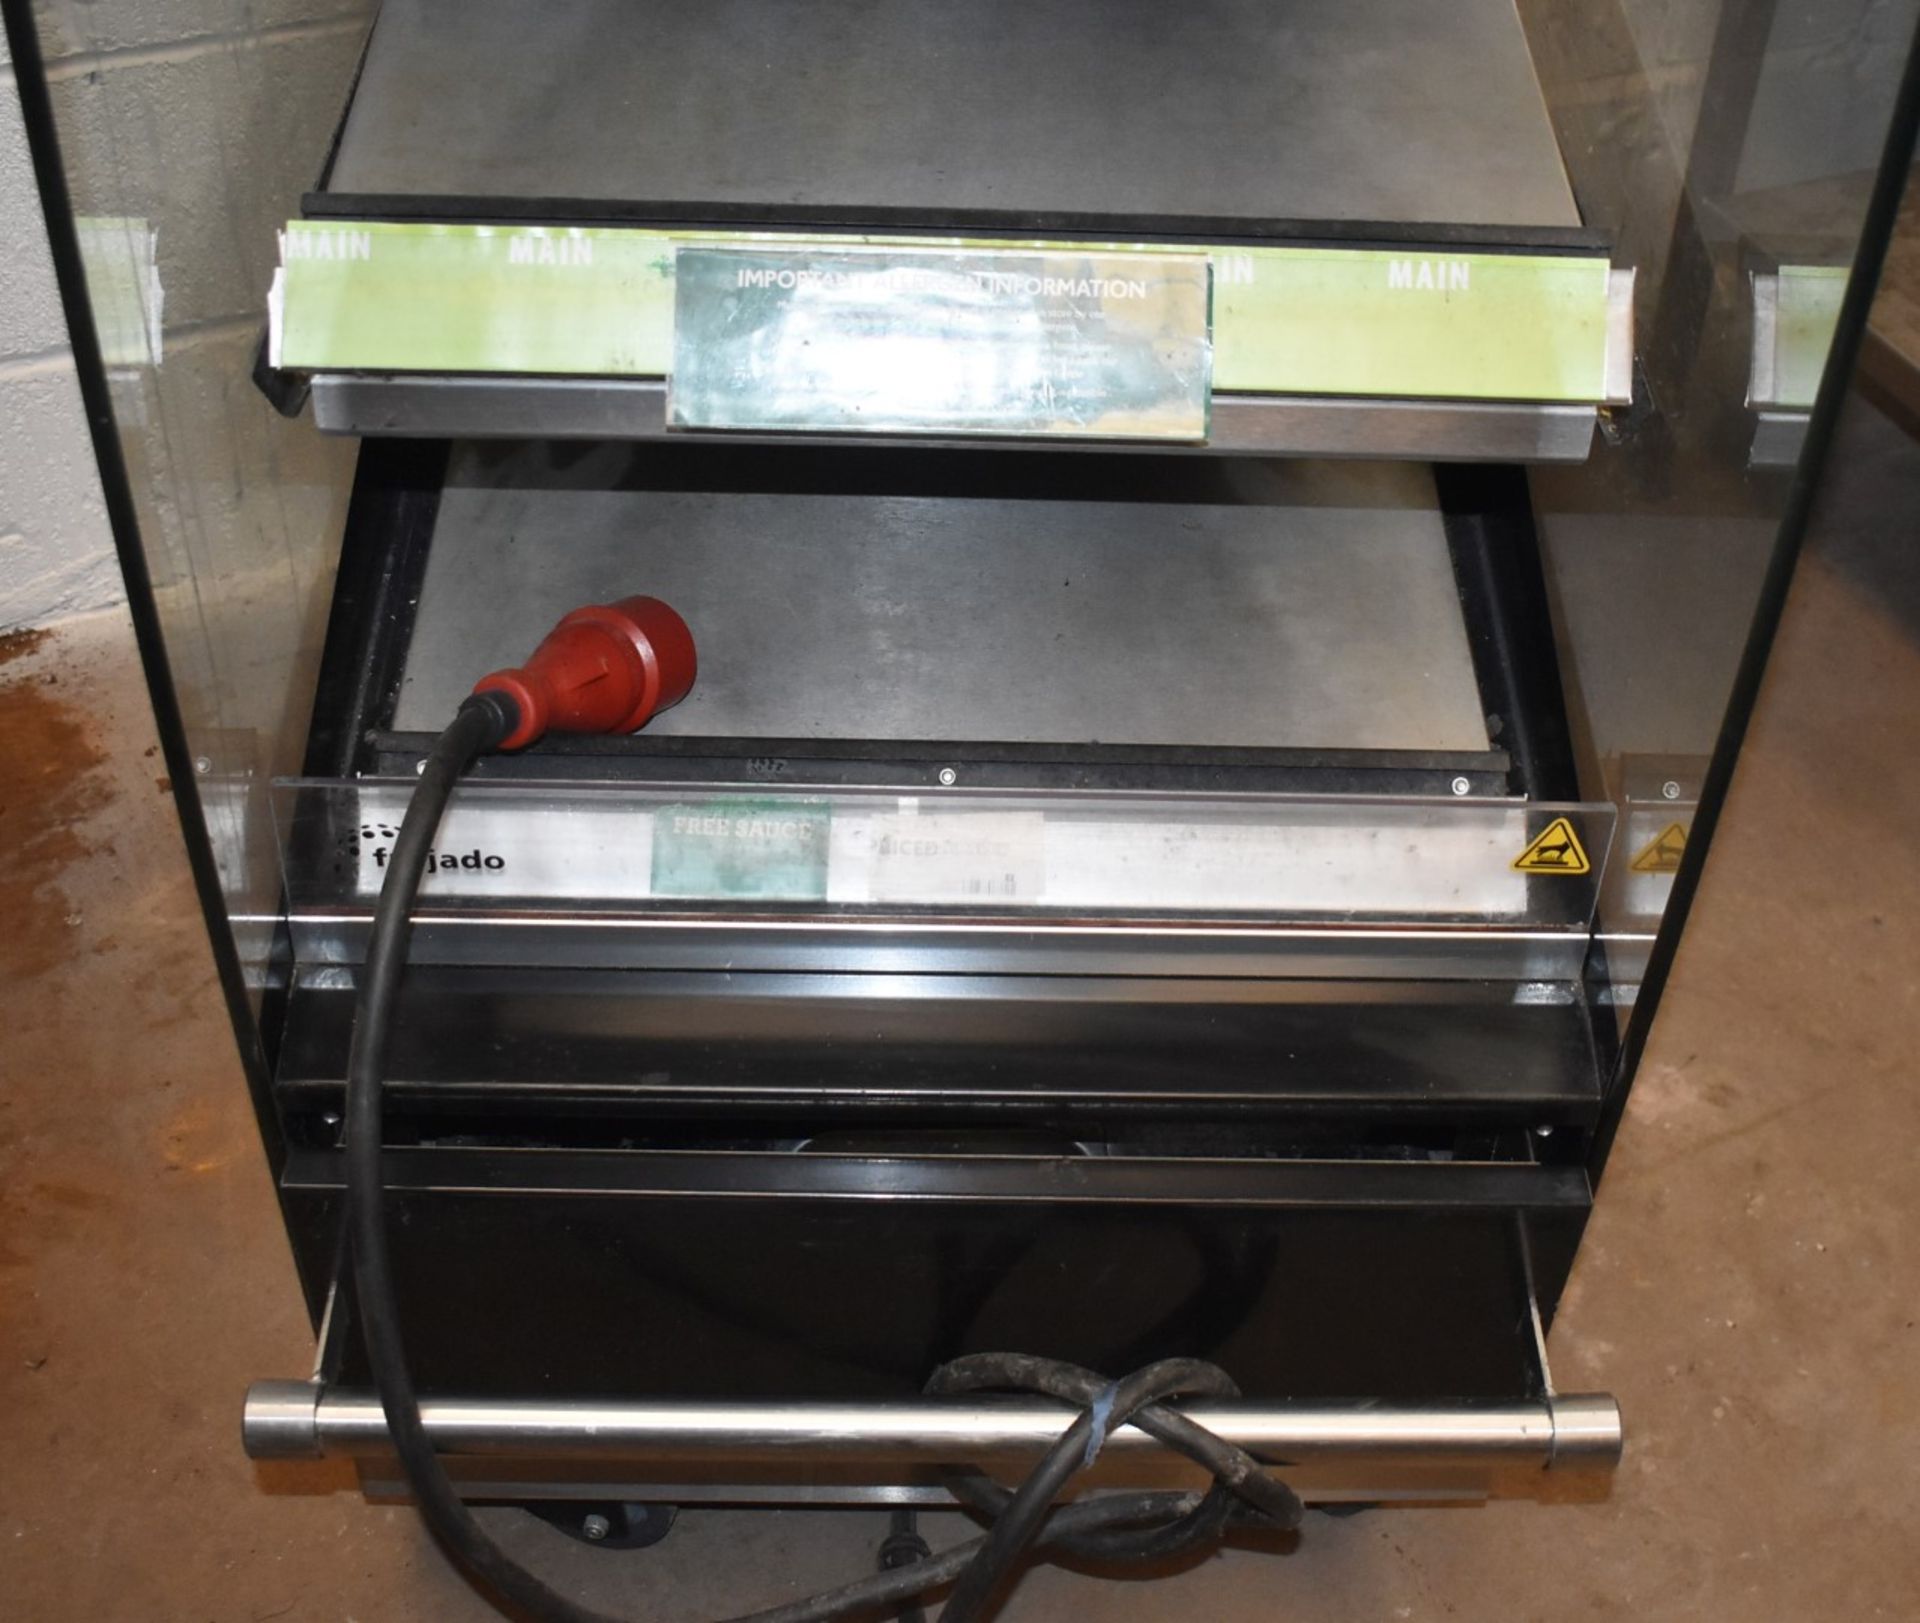 1 x Fri-Jado Four Tier Multi Deck Hot Food Warmer Heated Display Unit - Model MD60-5 SB - - Image 5 of 11